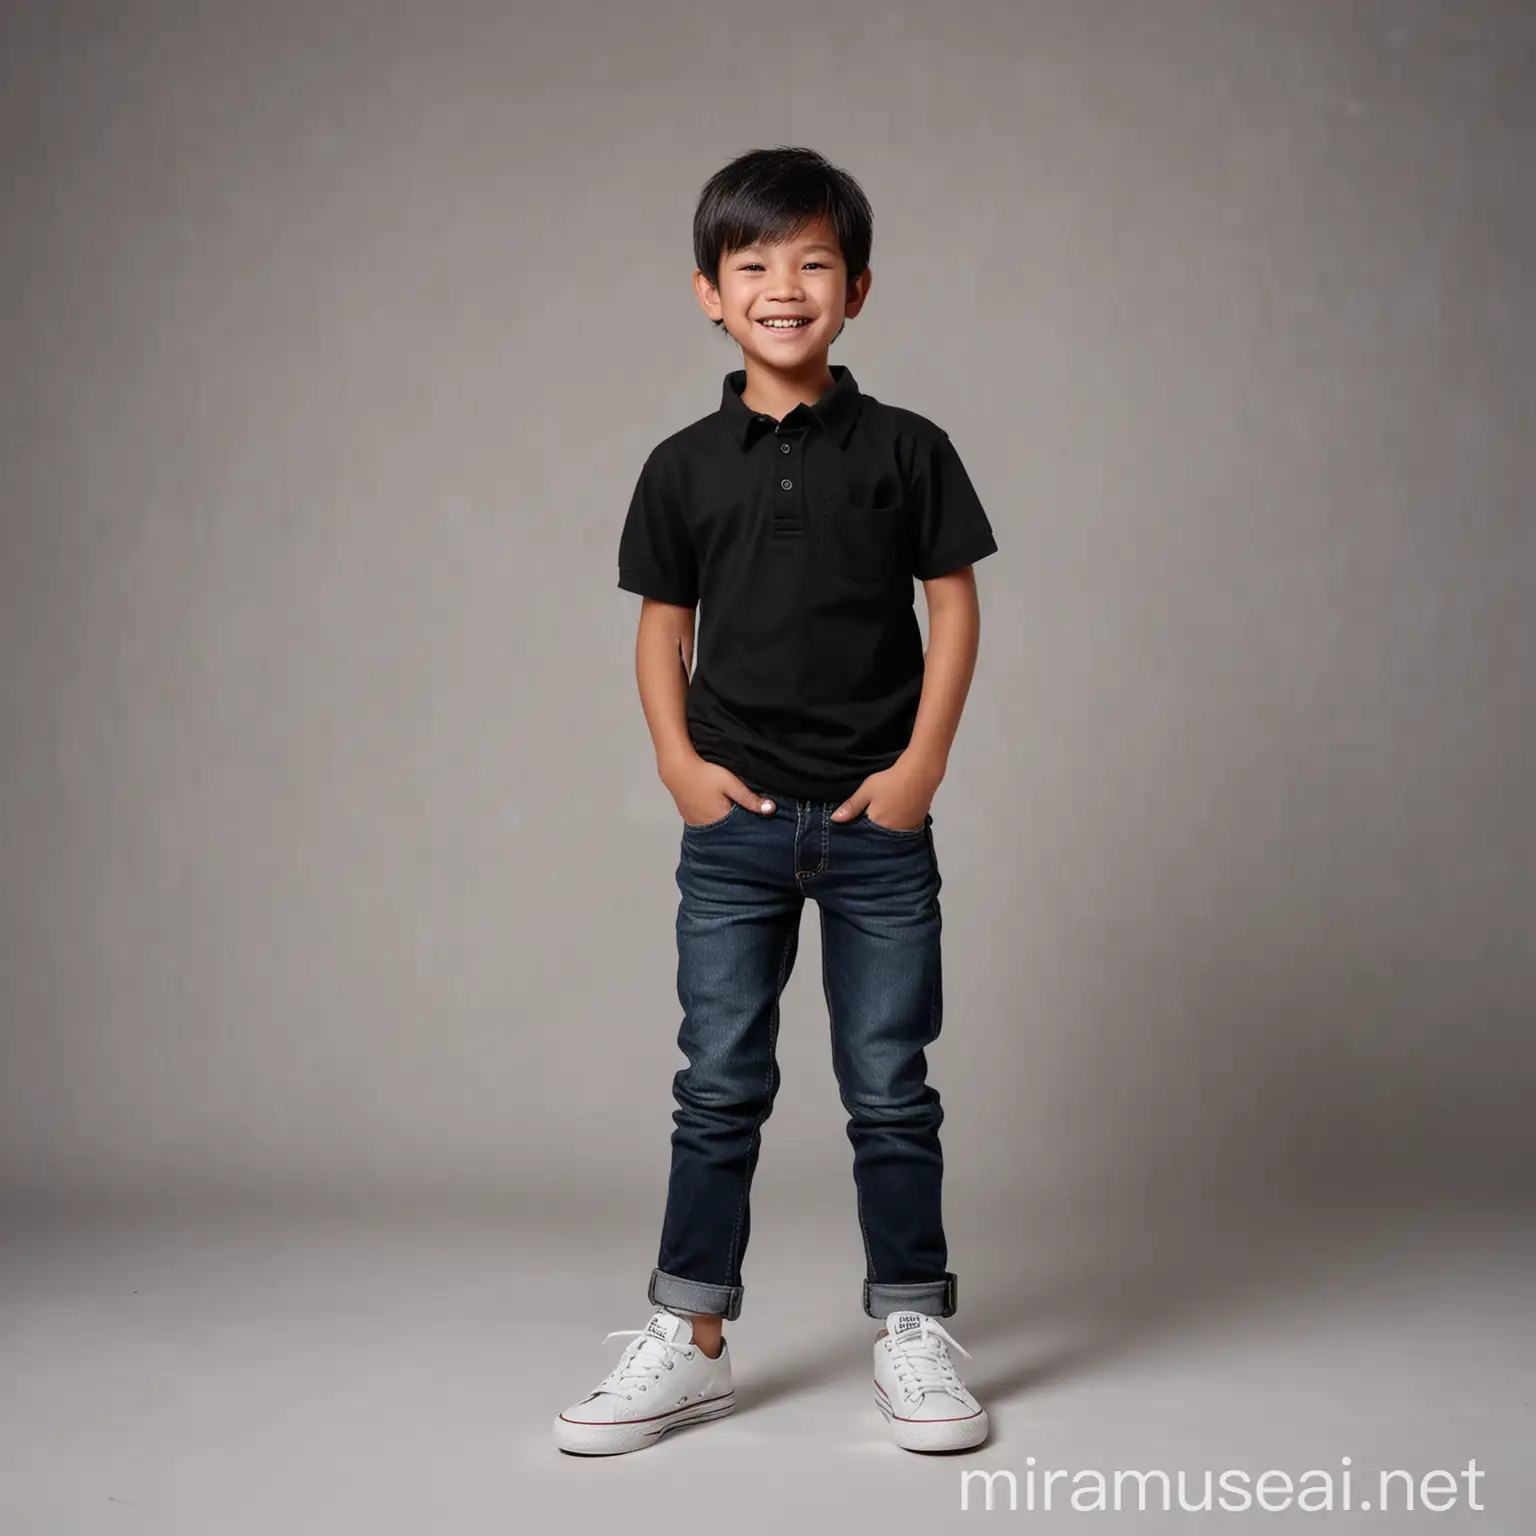 Joyful Indonesian Boy Celebrating 7th Birthday in Studio Portrait